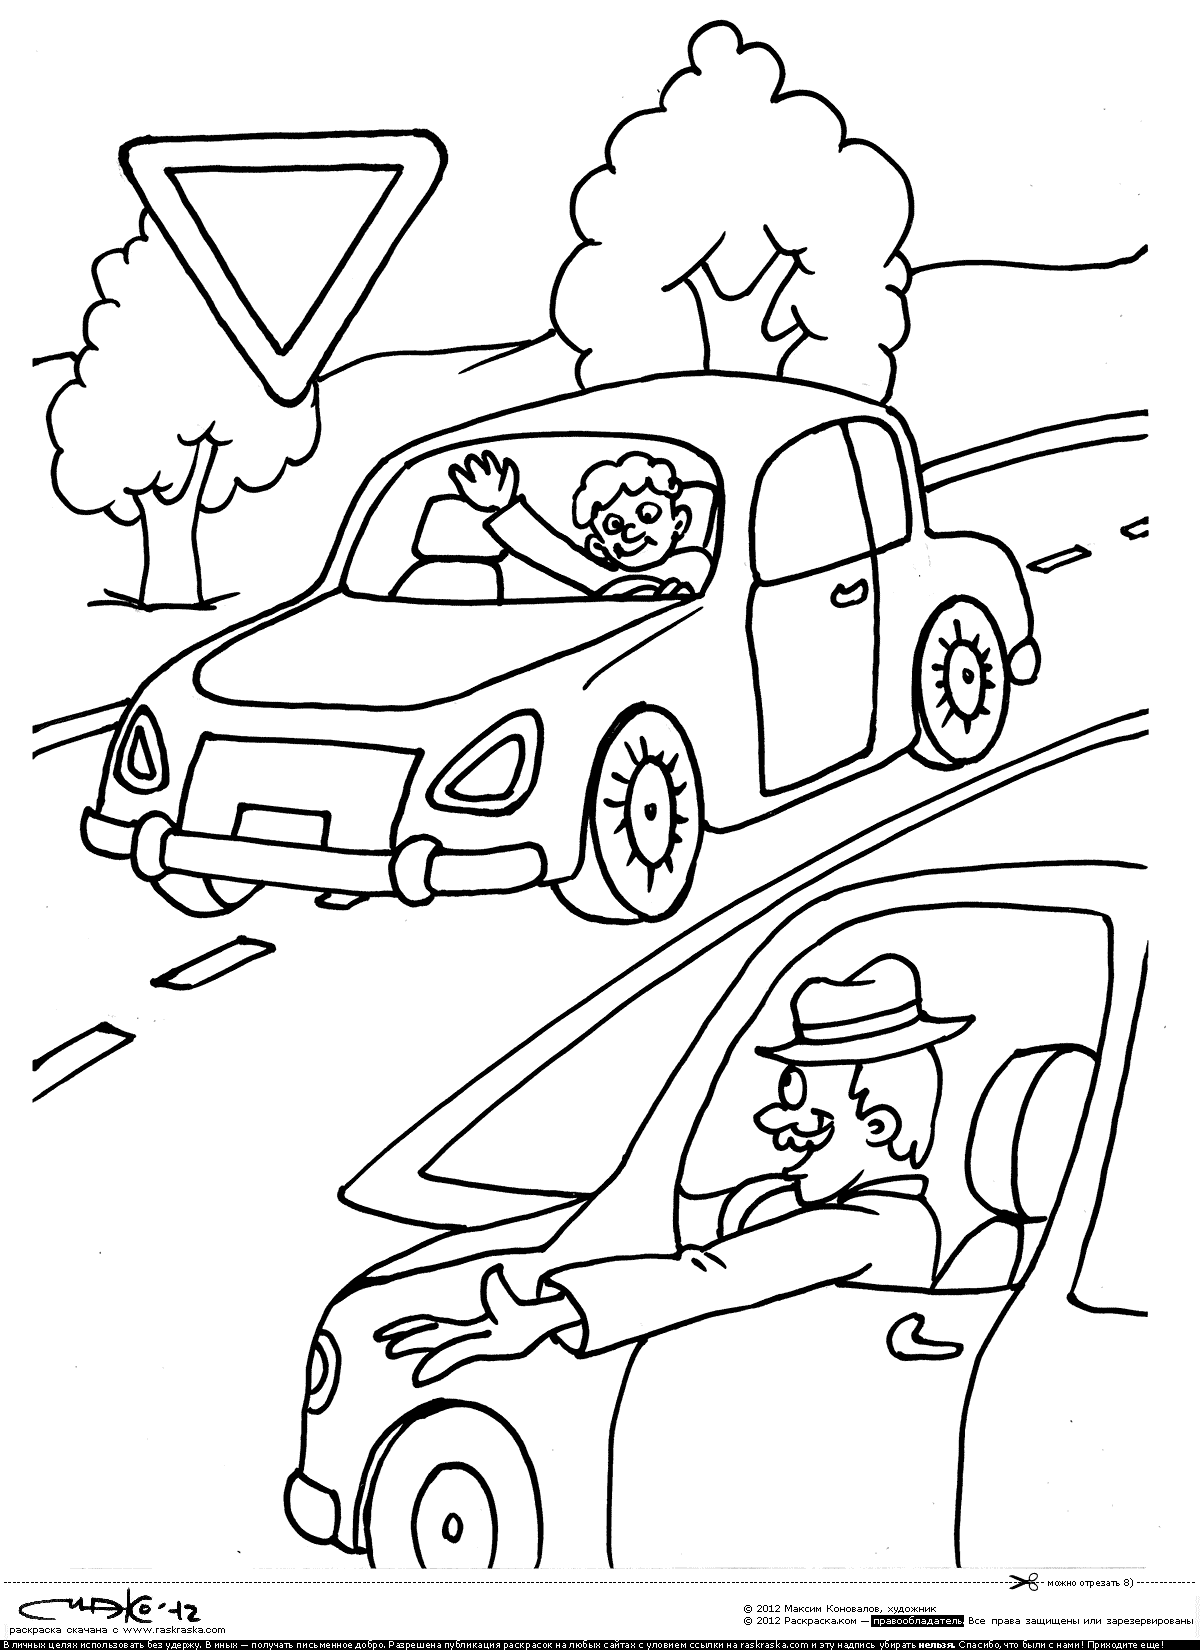 Розмальовки правила перехрестя, знак поступися дорогою, дерева 